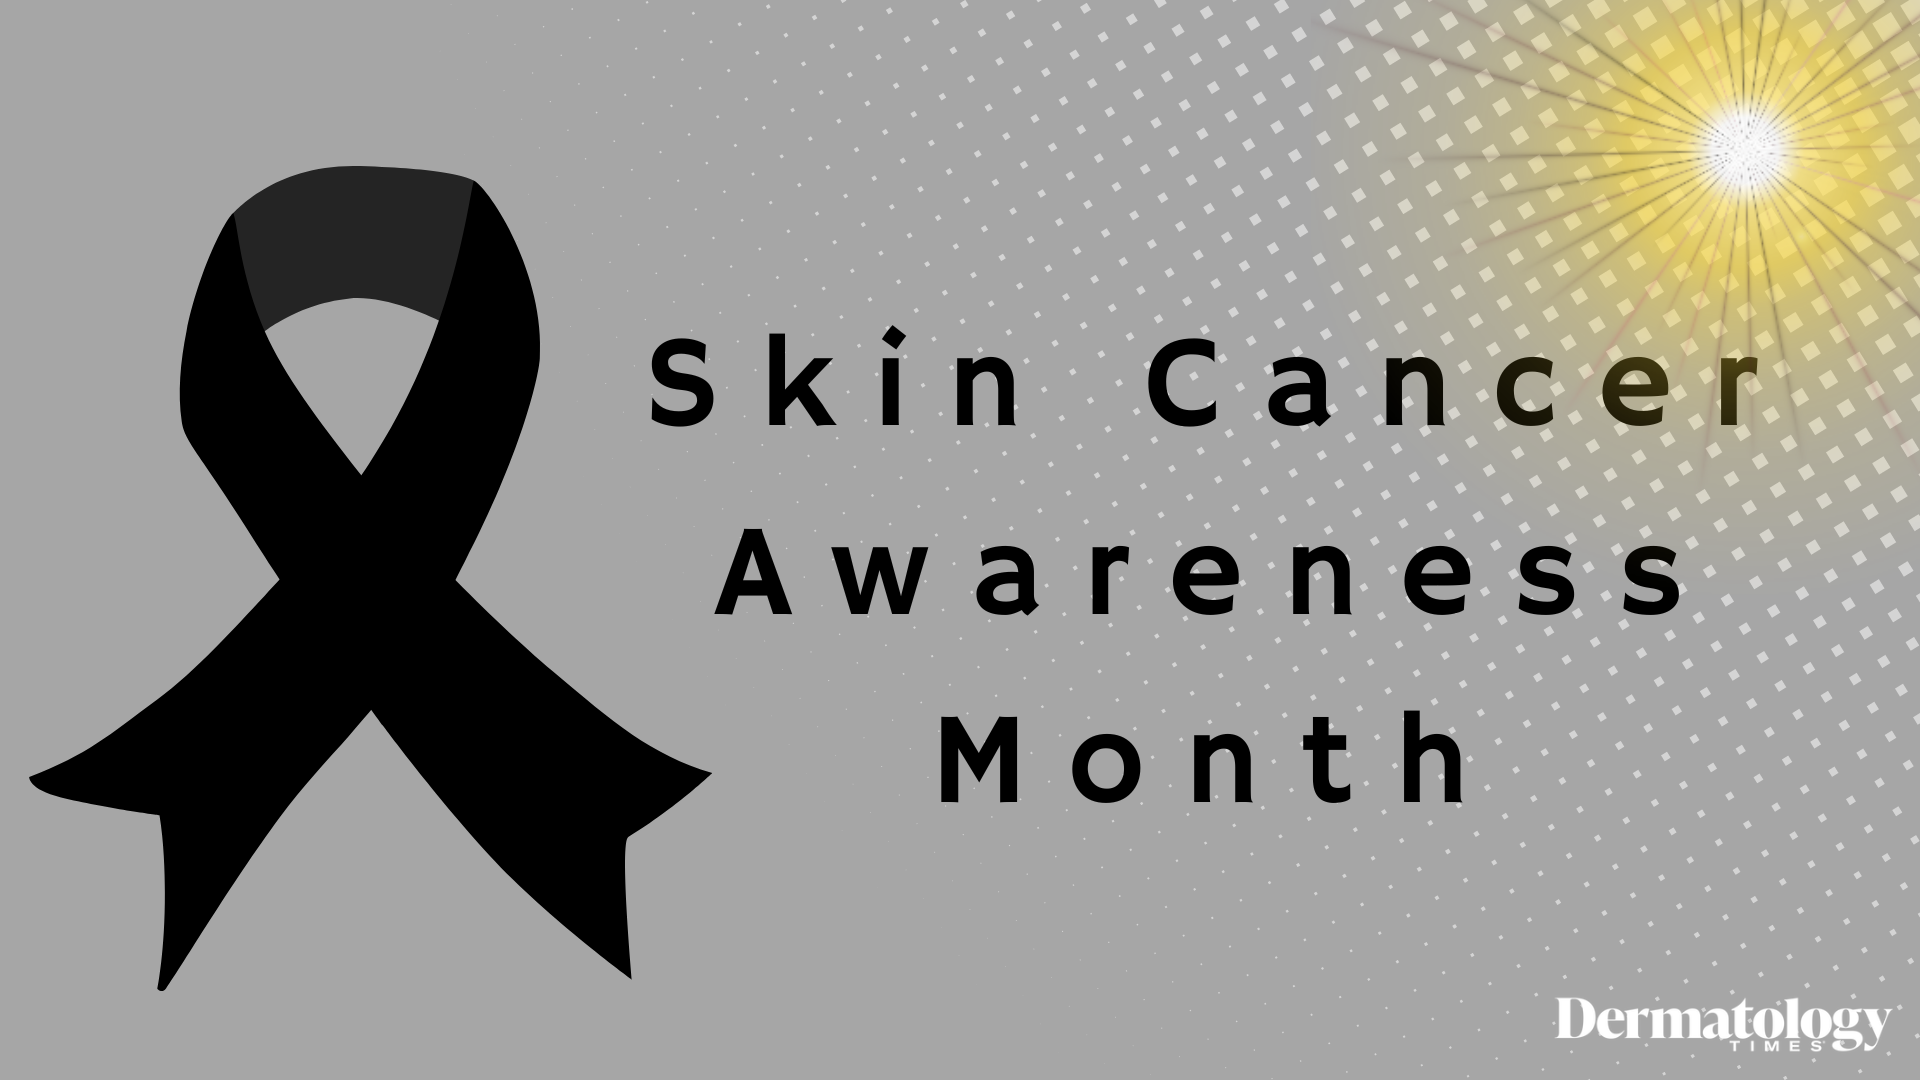 Skin Cancer Awareness Month logo